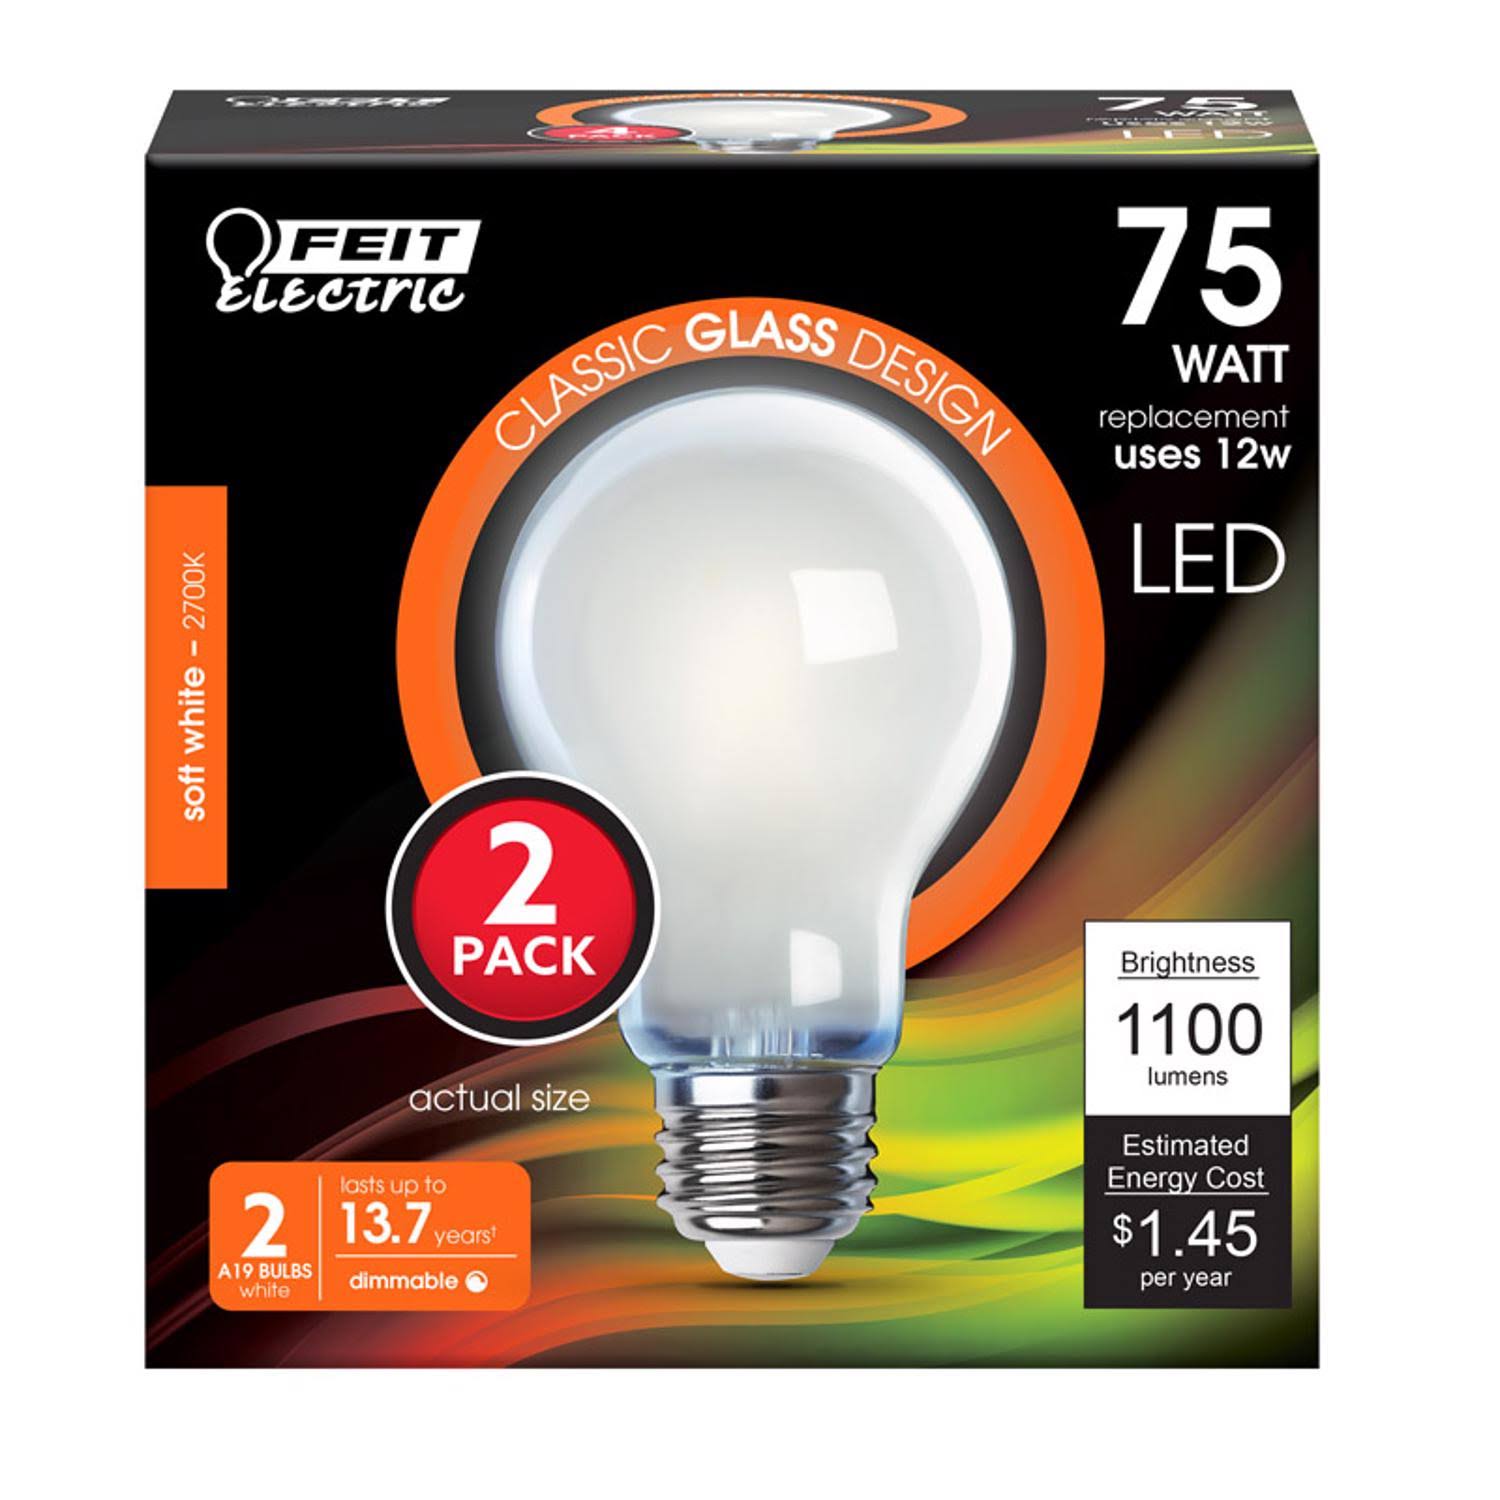 Feit Electric Light Bulbs, LED, Glass, Soft White, 12 watts, 2 Pack - 2 light bulbs